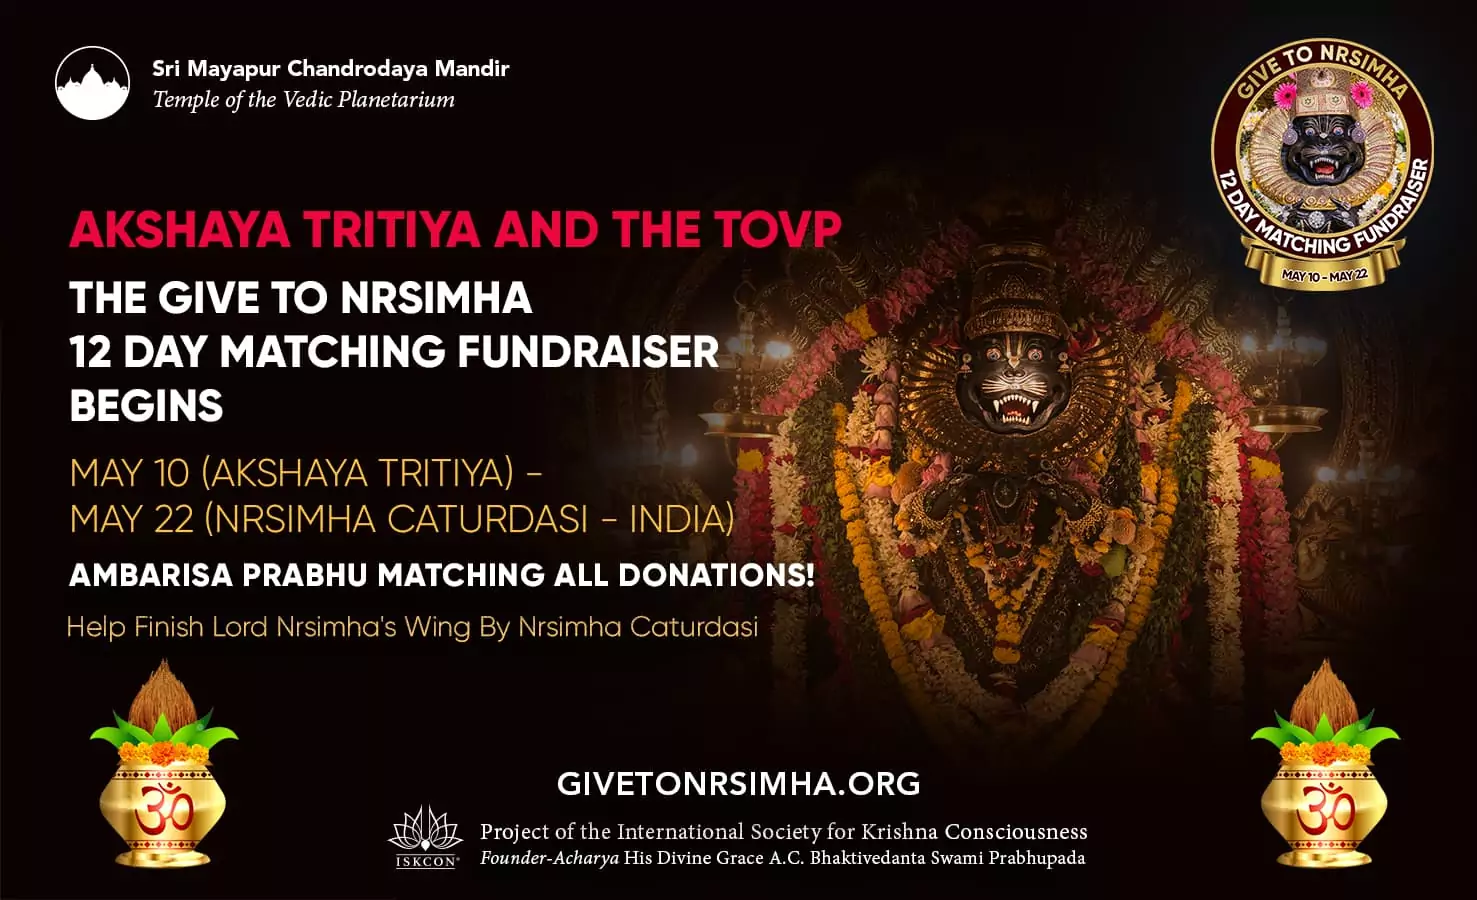 Akshaya Tritiya，5 月 10 日：TOVP 向 Nrsimha 捐赠 12 天配套募捐活动开始